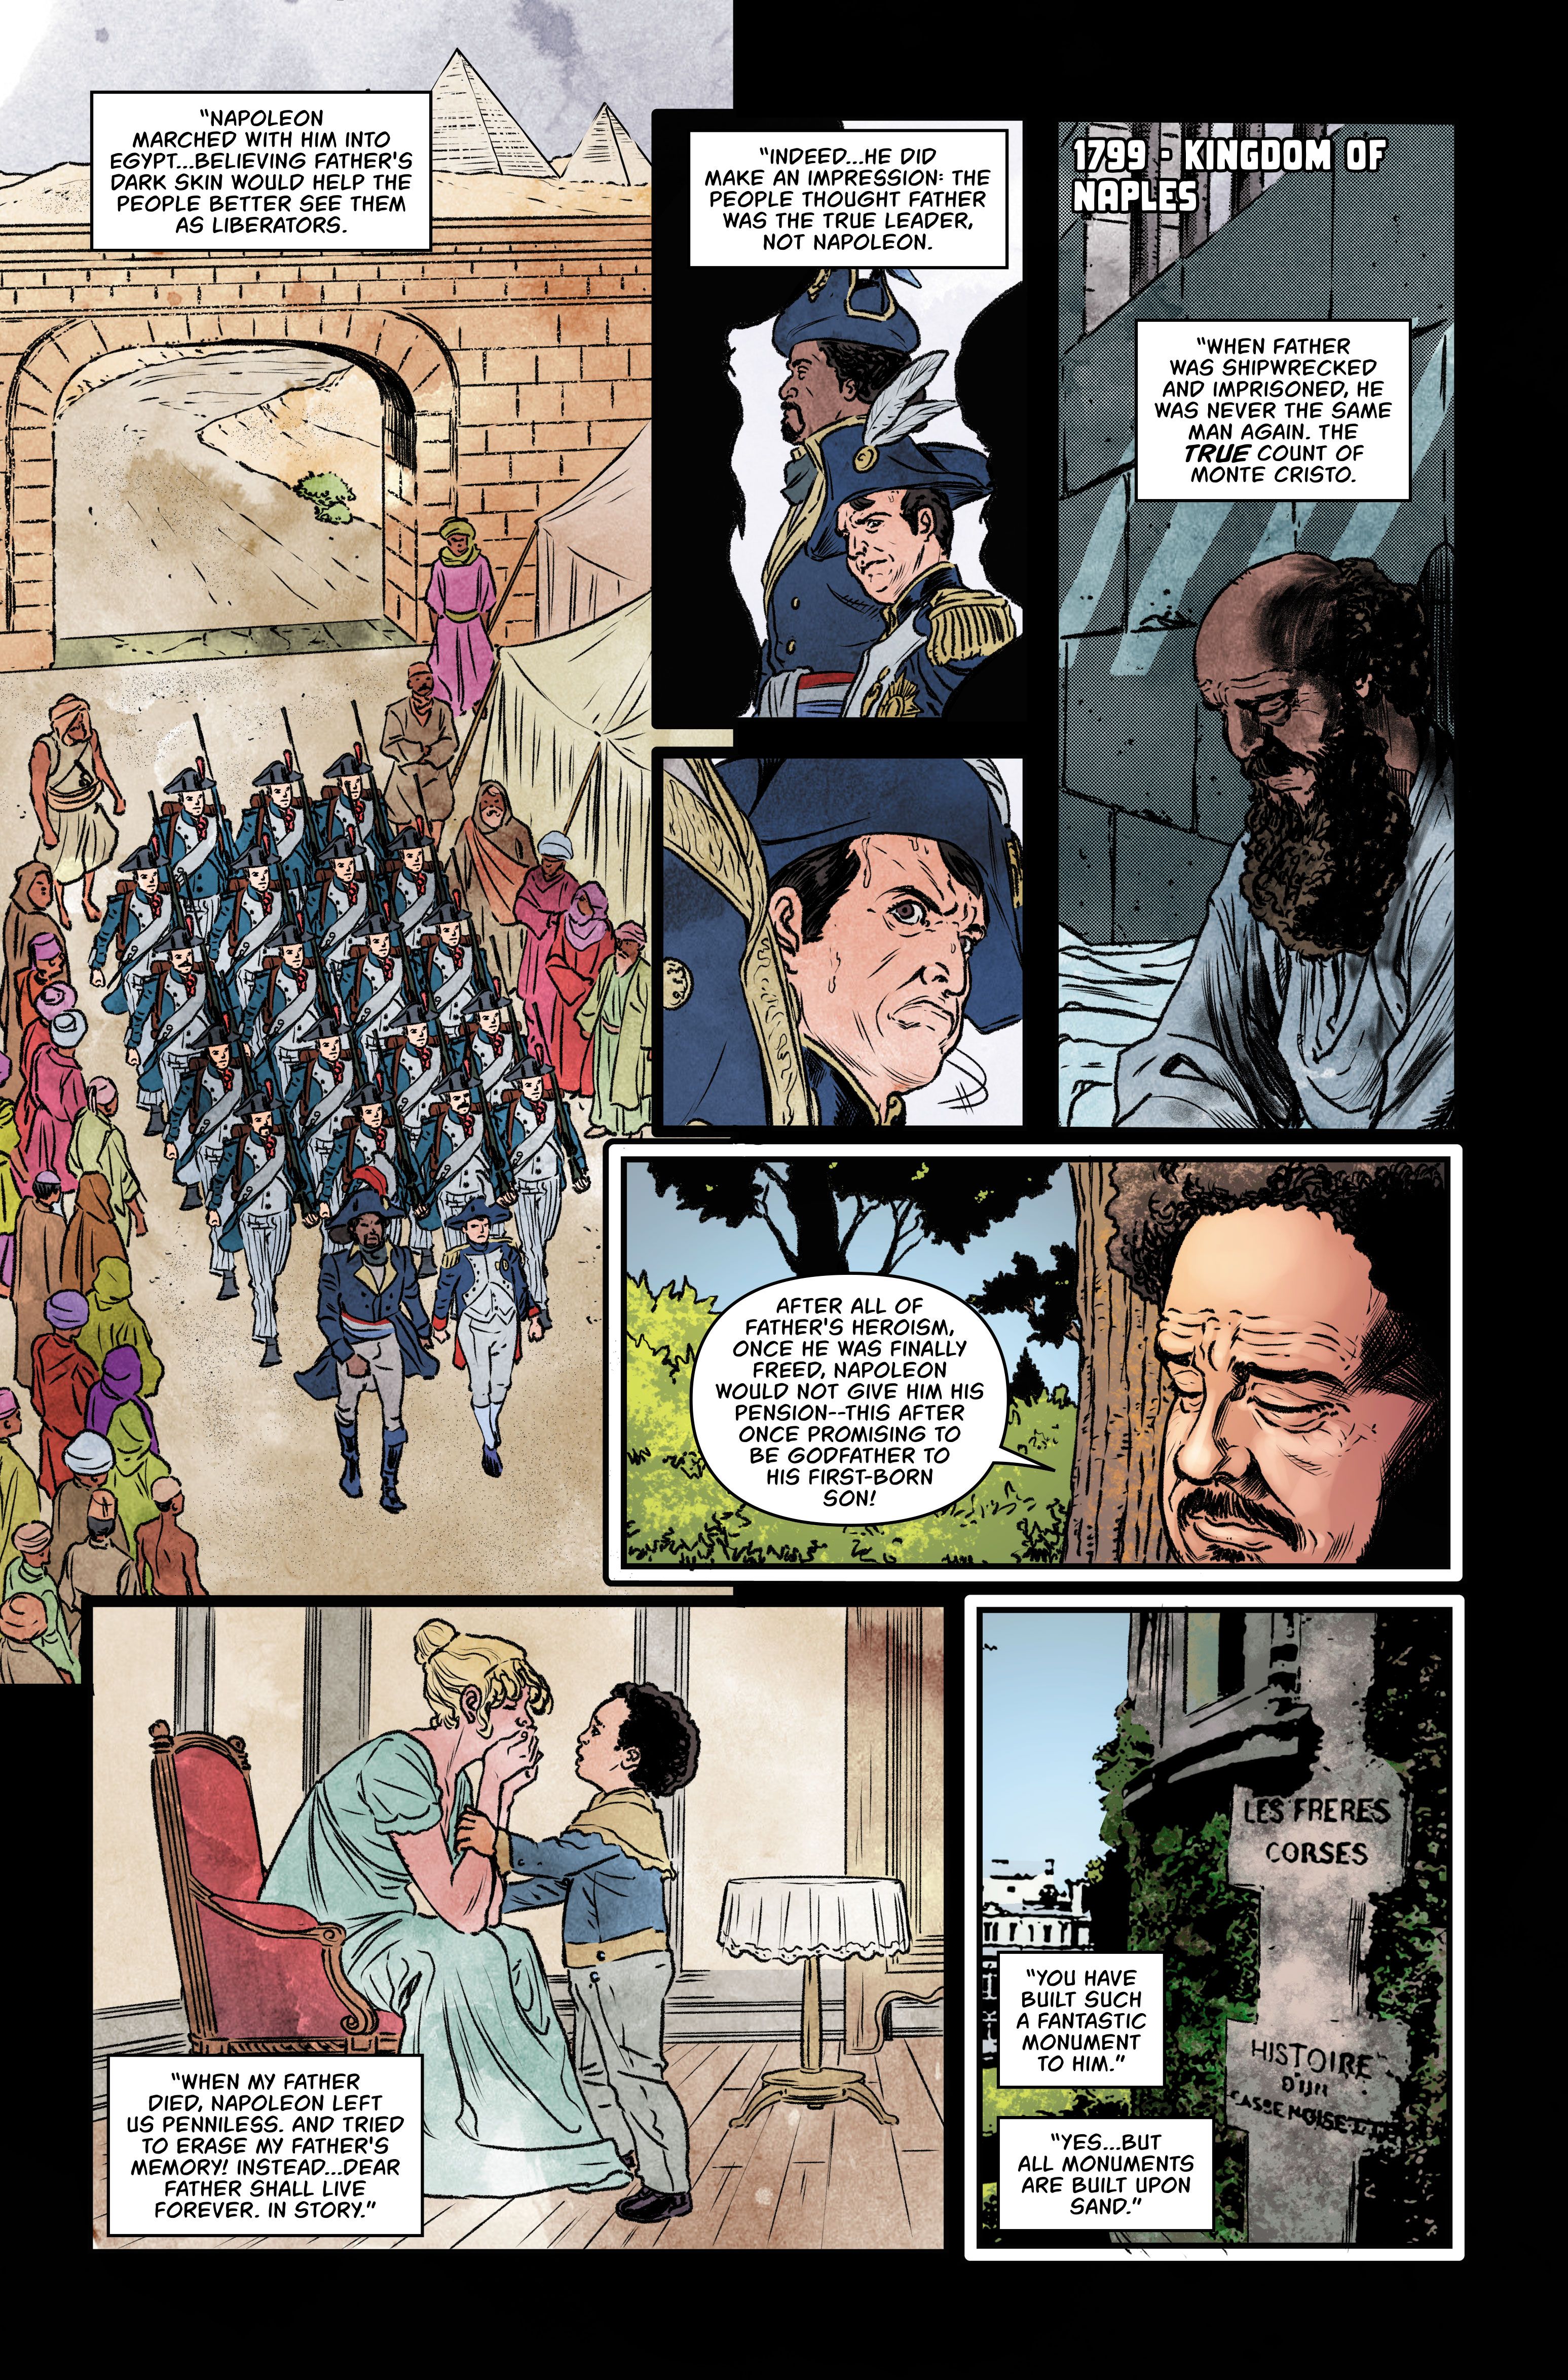 EXCLUSIVE PREVIEW: DC’s Milestone in History Shines a Spotlight on Alexandre Dumas, activist Katherine Dunham